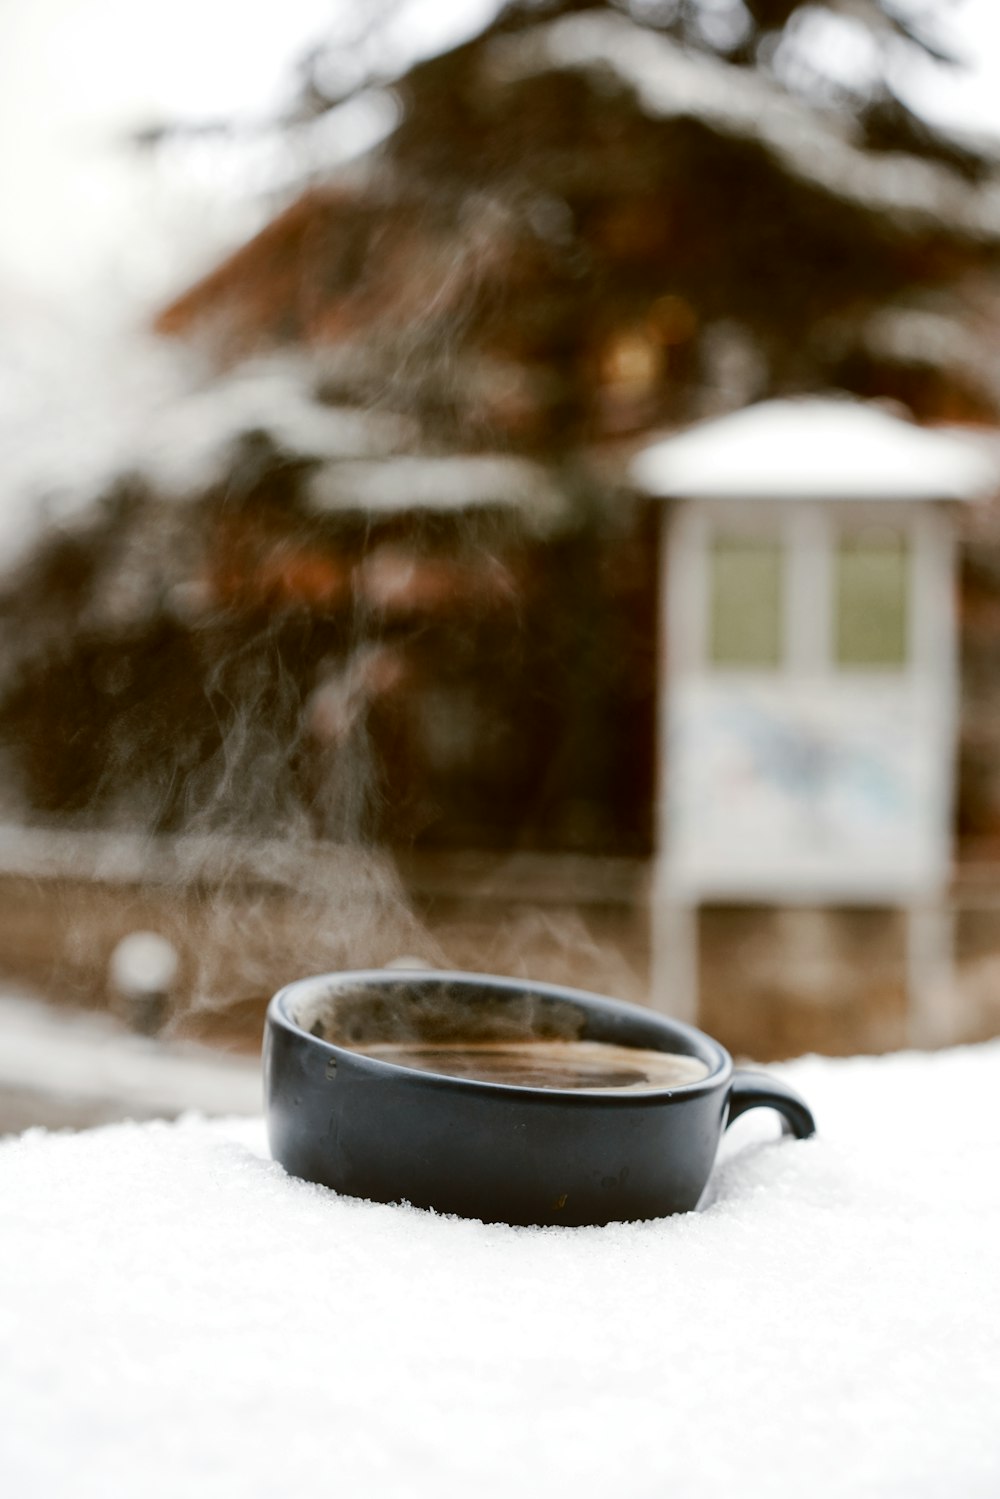 black ceramic mug on snow covered ground